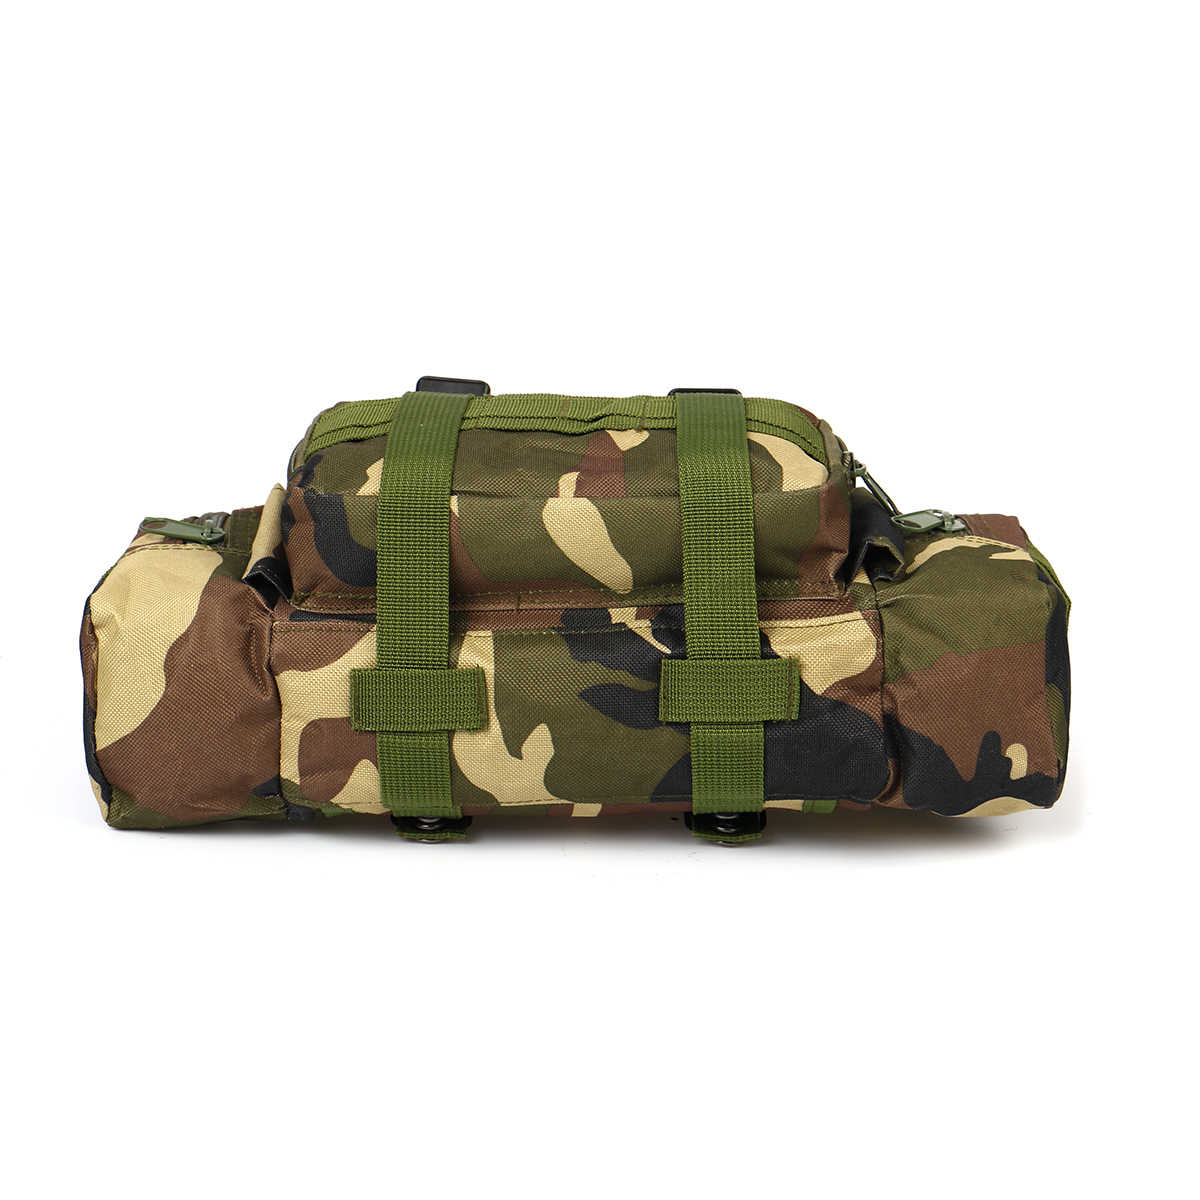 600D-Oxford-Cloth-Waist-Bag-Waterproof-Tactical-Pouch-Shoulder-Bag-Handbag-Outdoor-Camping-Hunting-1818079-7